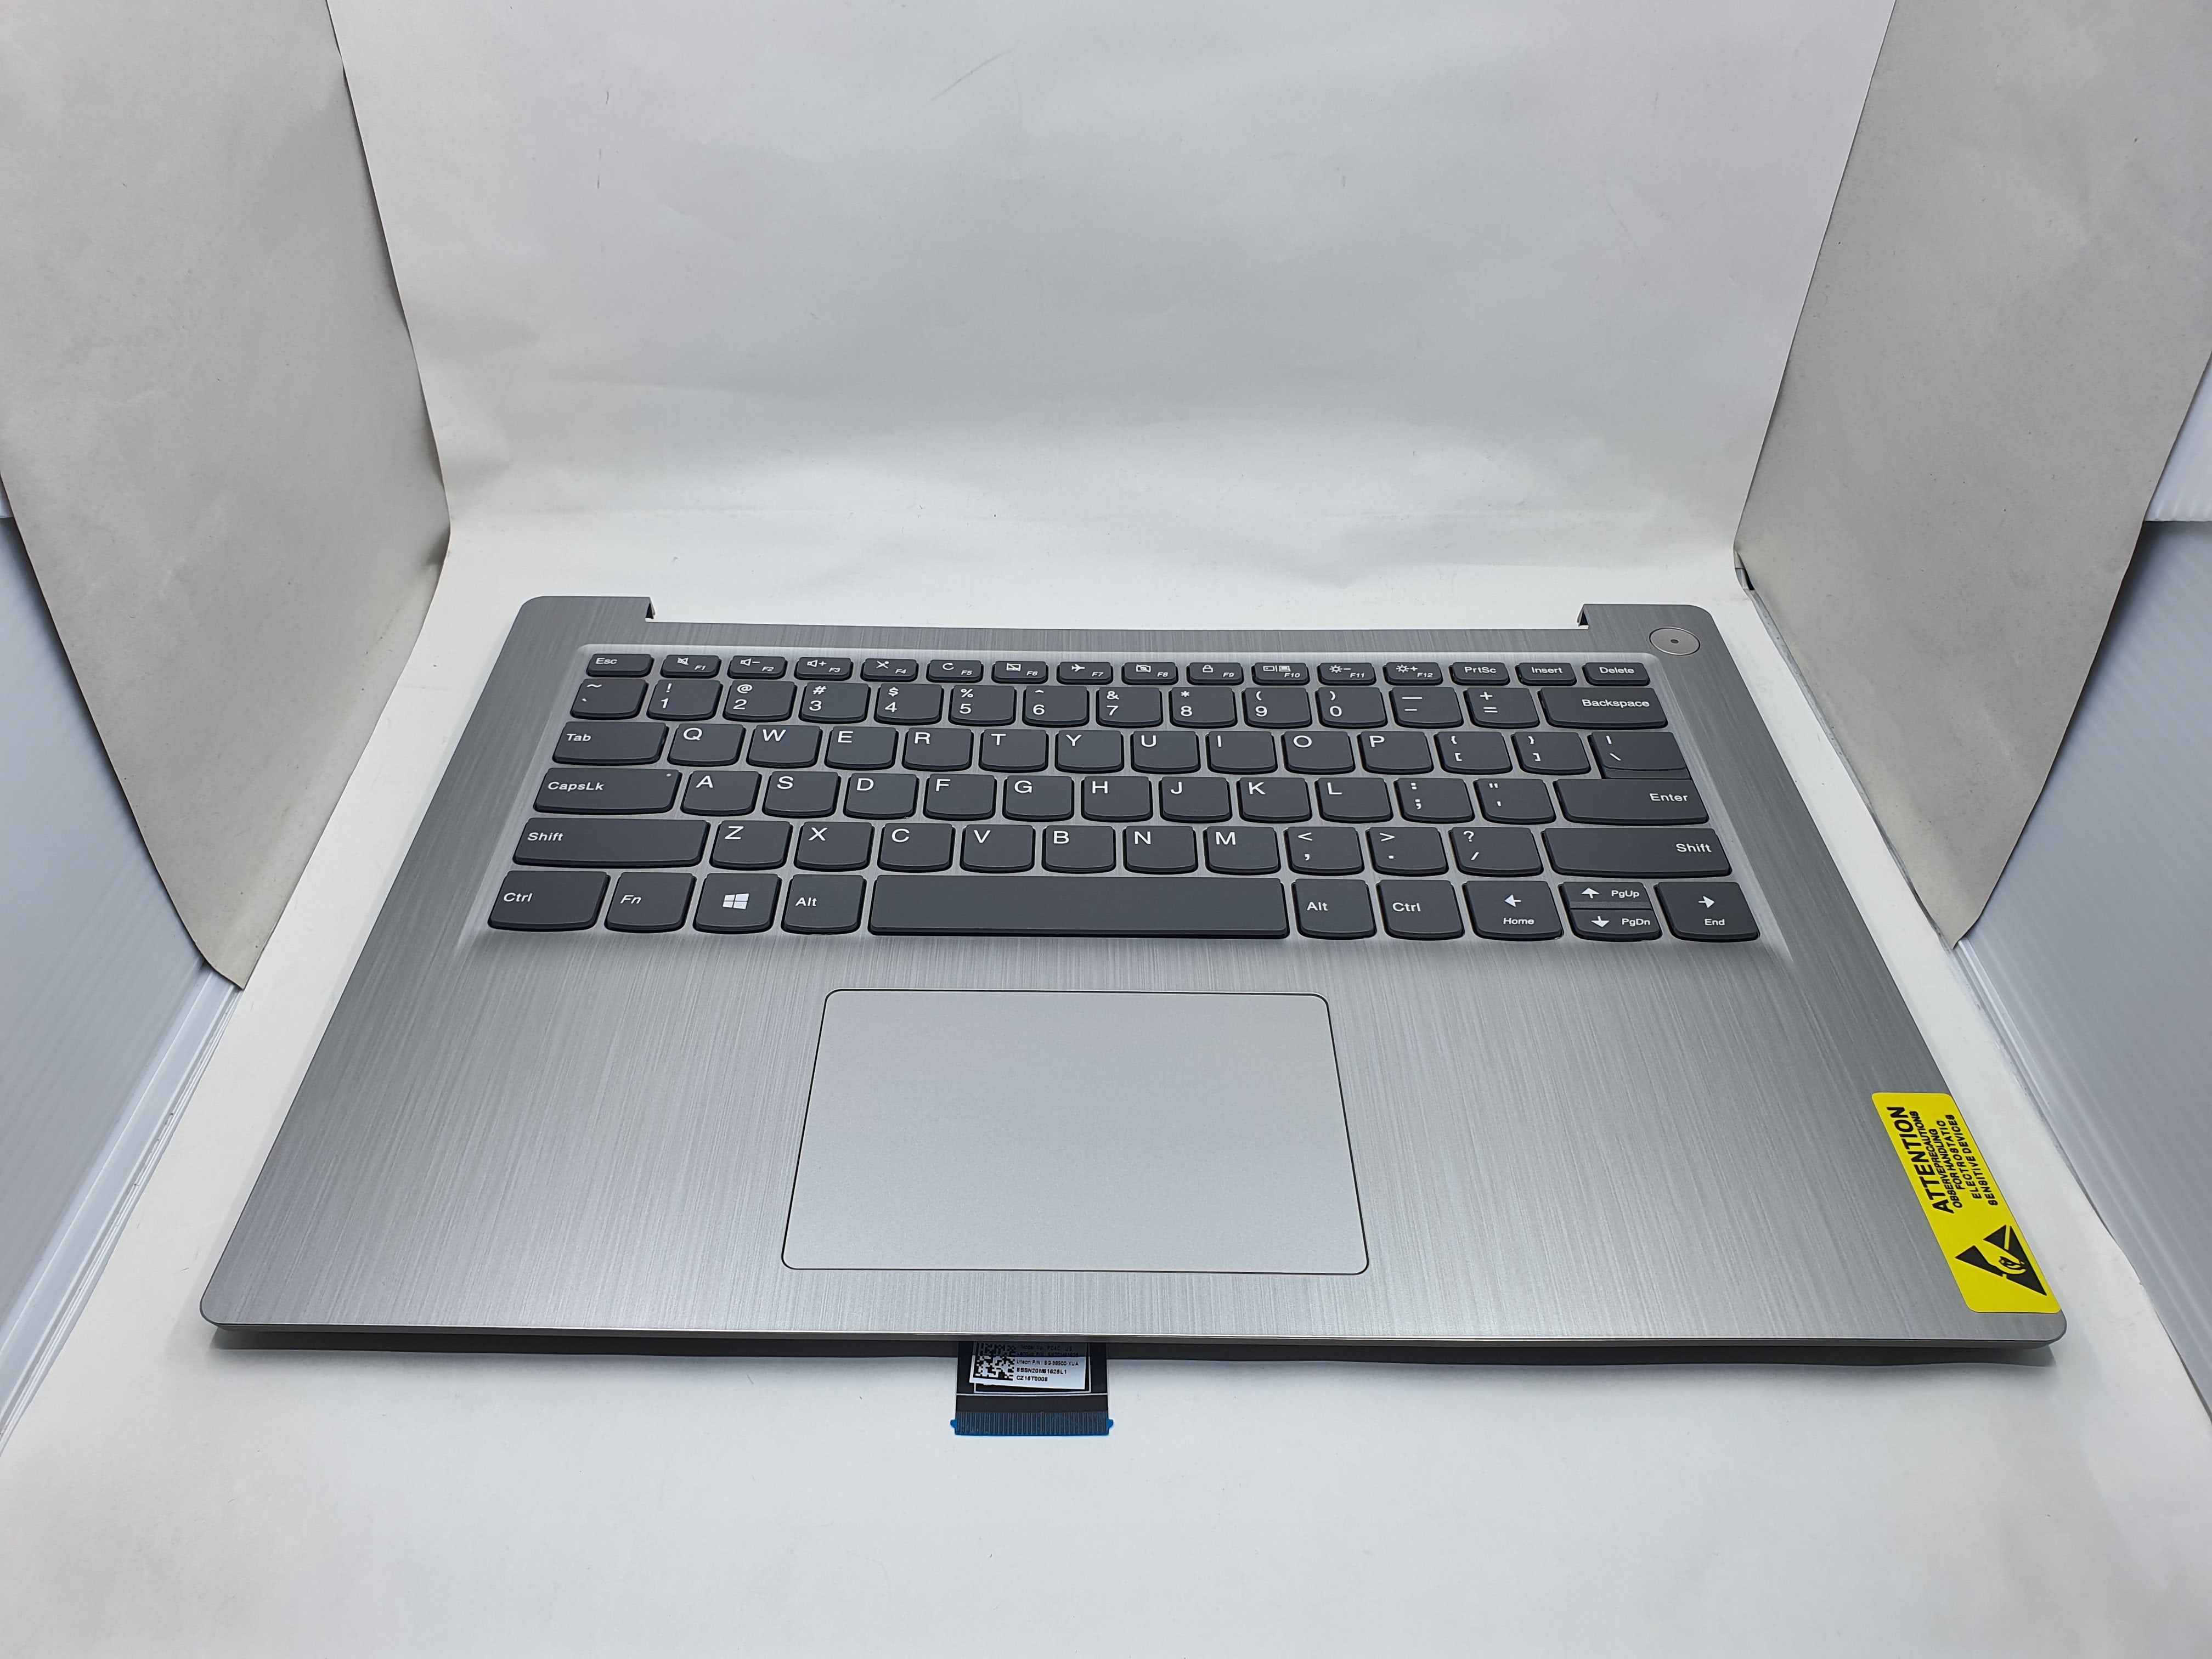 Lenovo Keyboard IdeaPad 3-14IML05 WL for Replacement - IdeaPad 3-14IML05